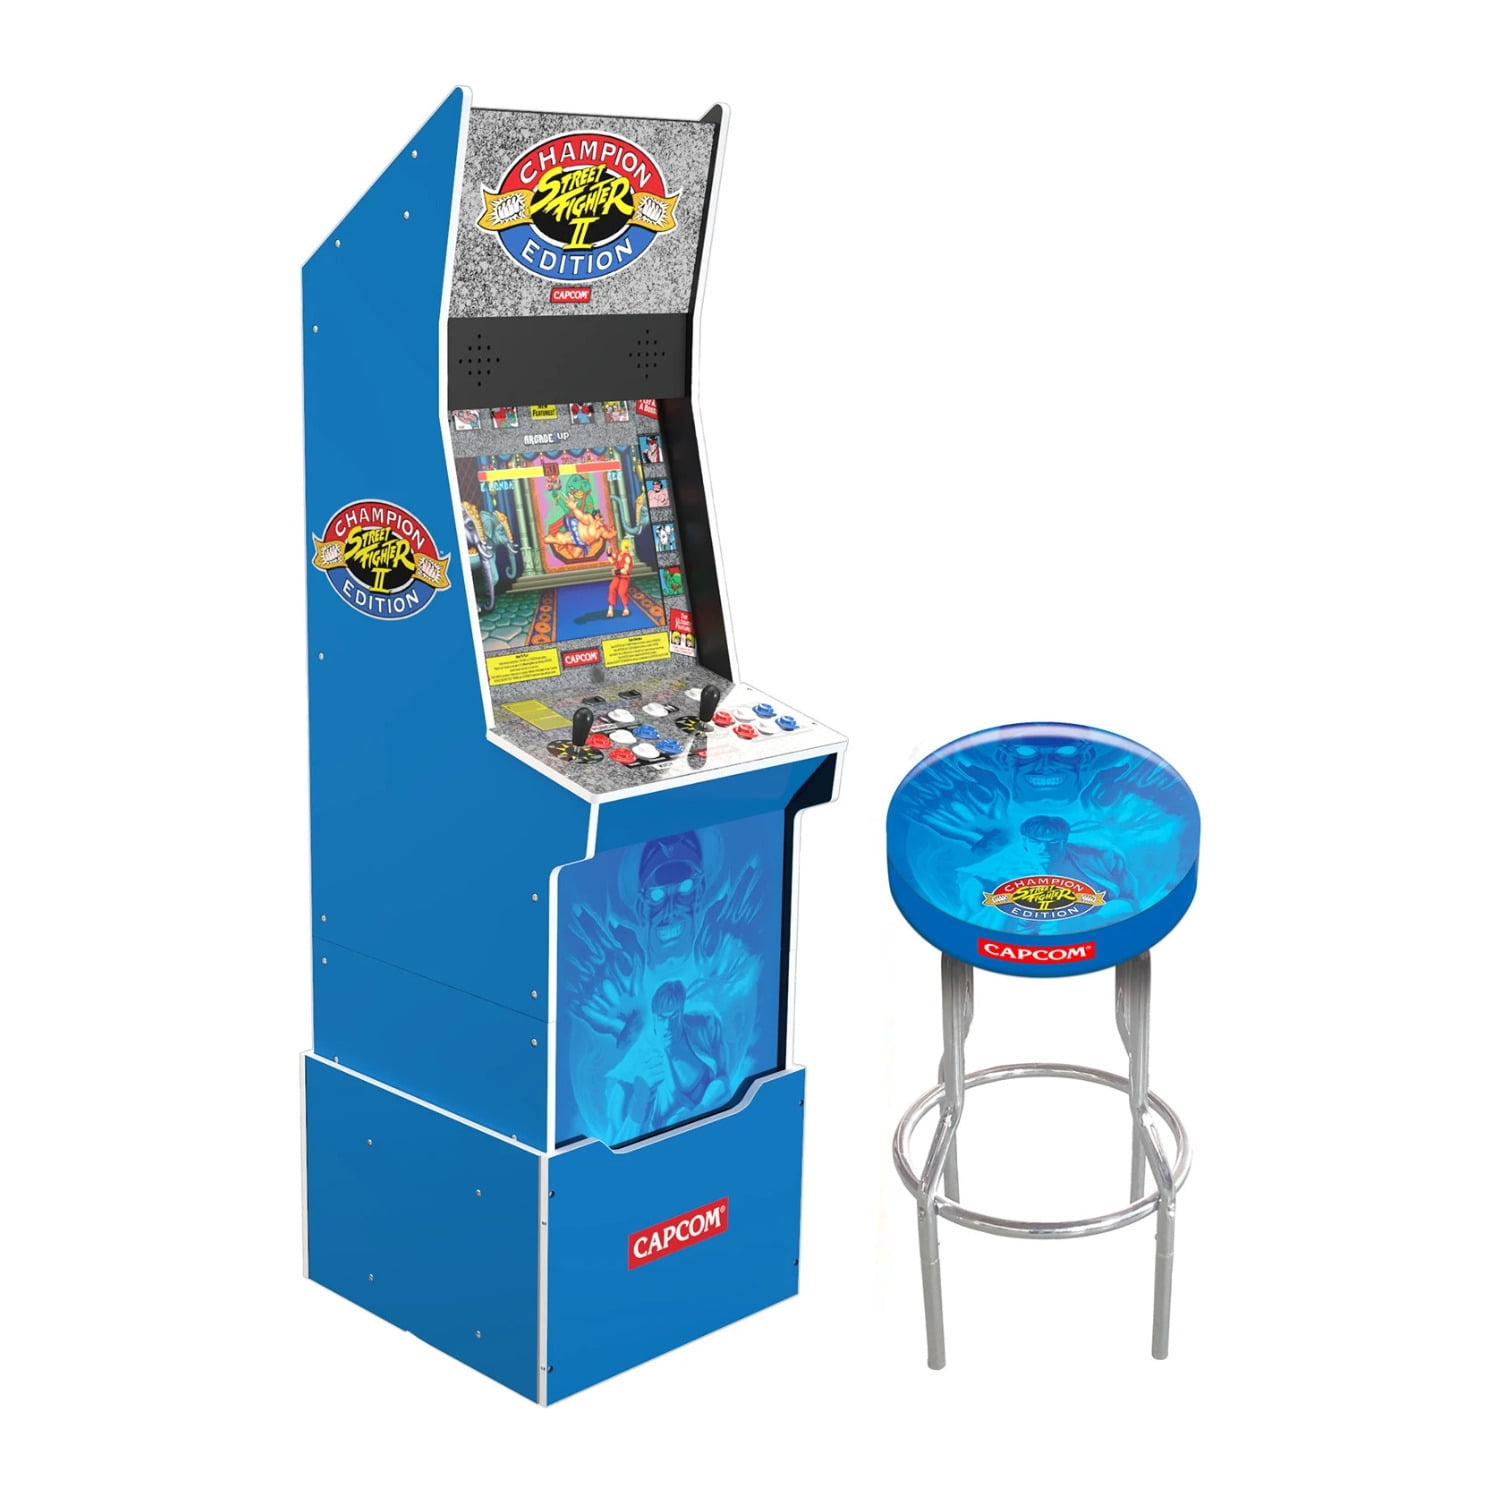 Details about   Street Fighter 2 Arcade Machine Retro Original Artwork Cabinet 3 Games LCD New 